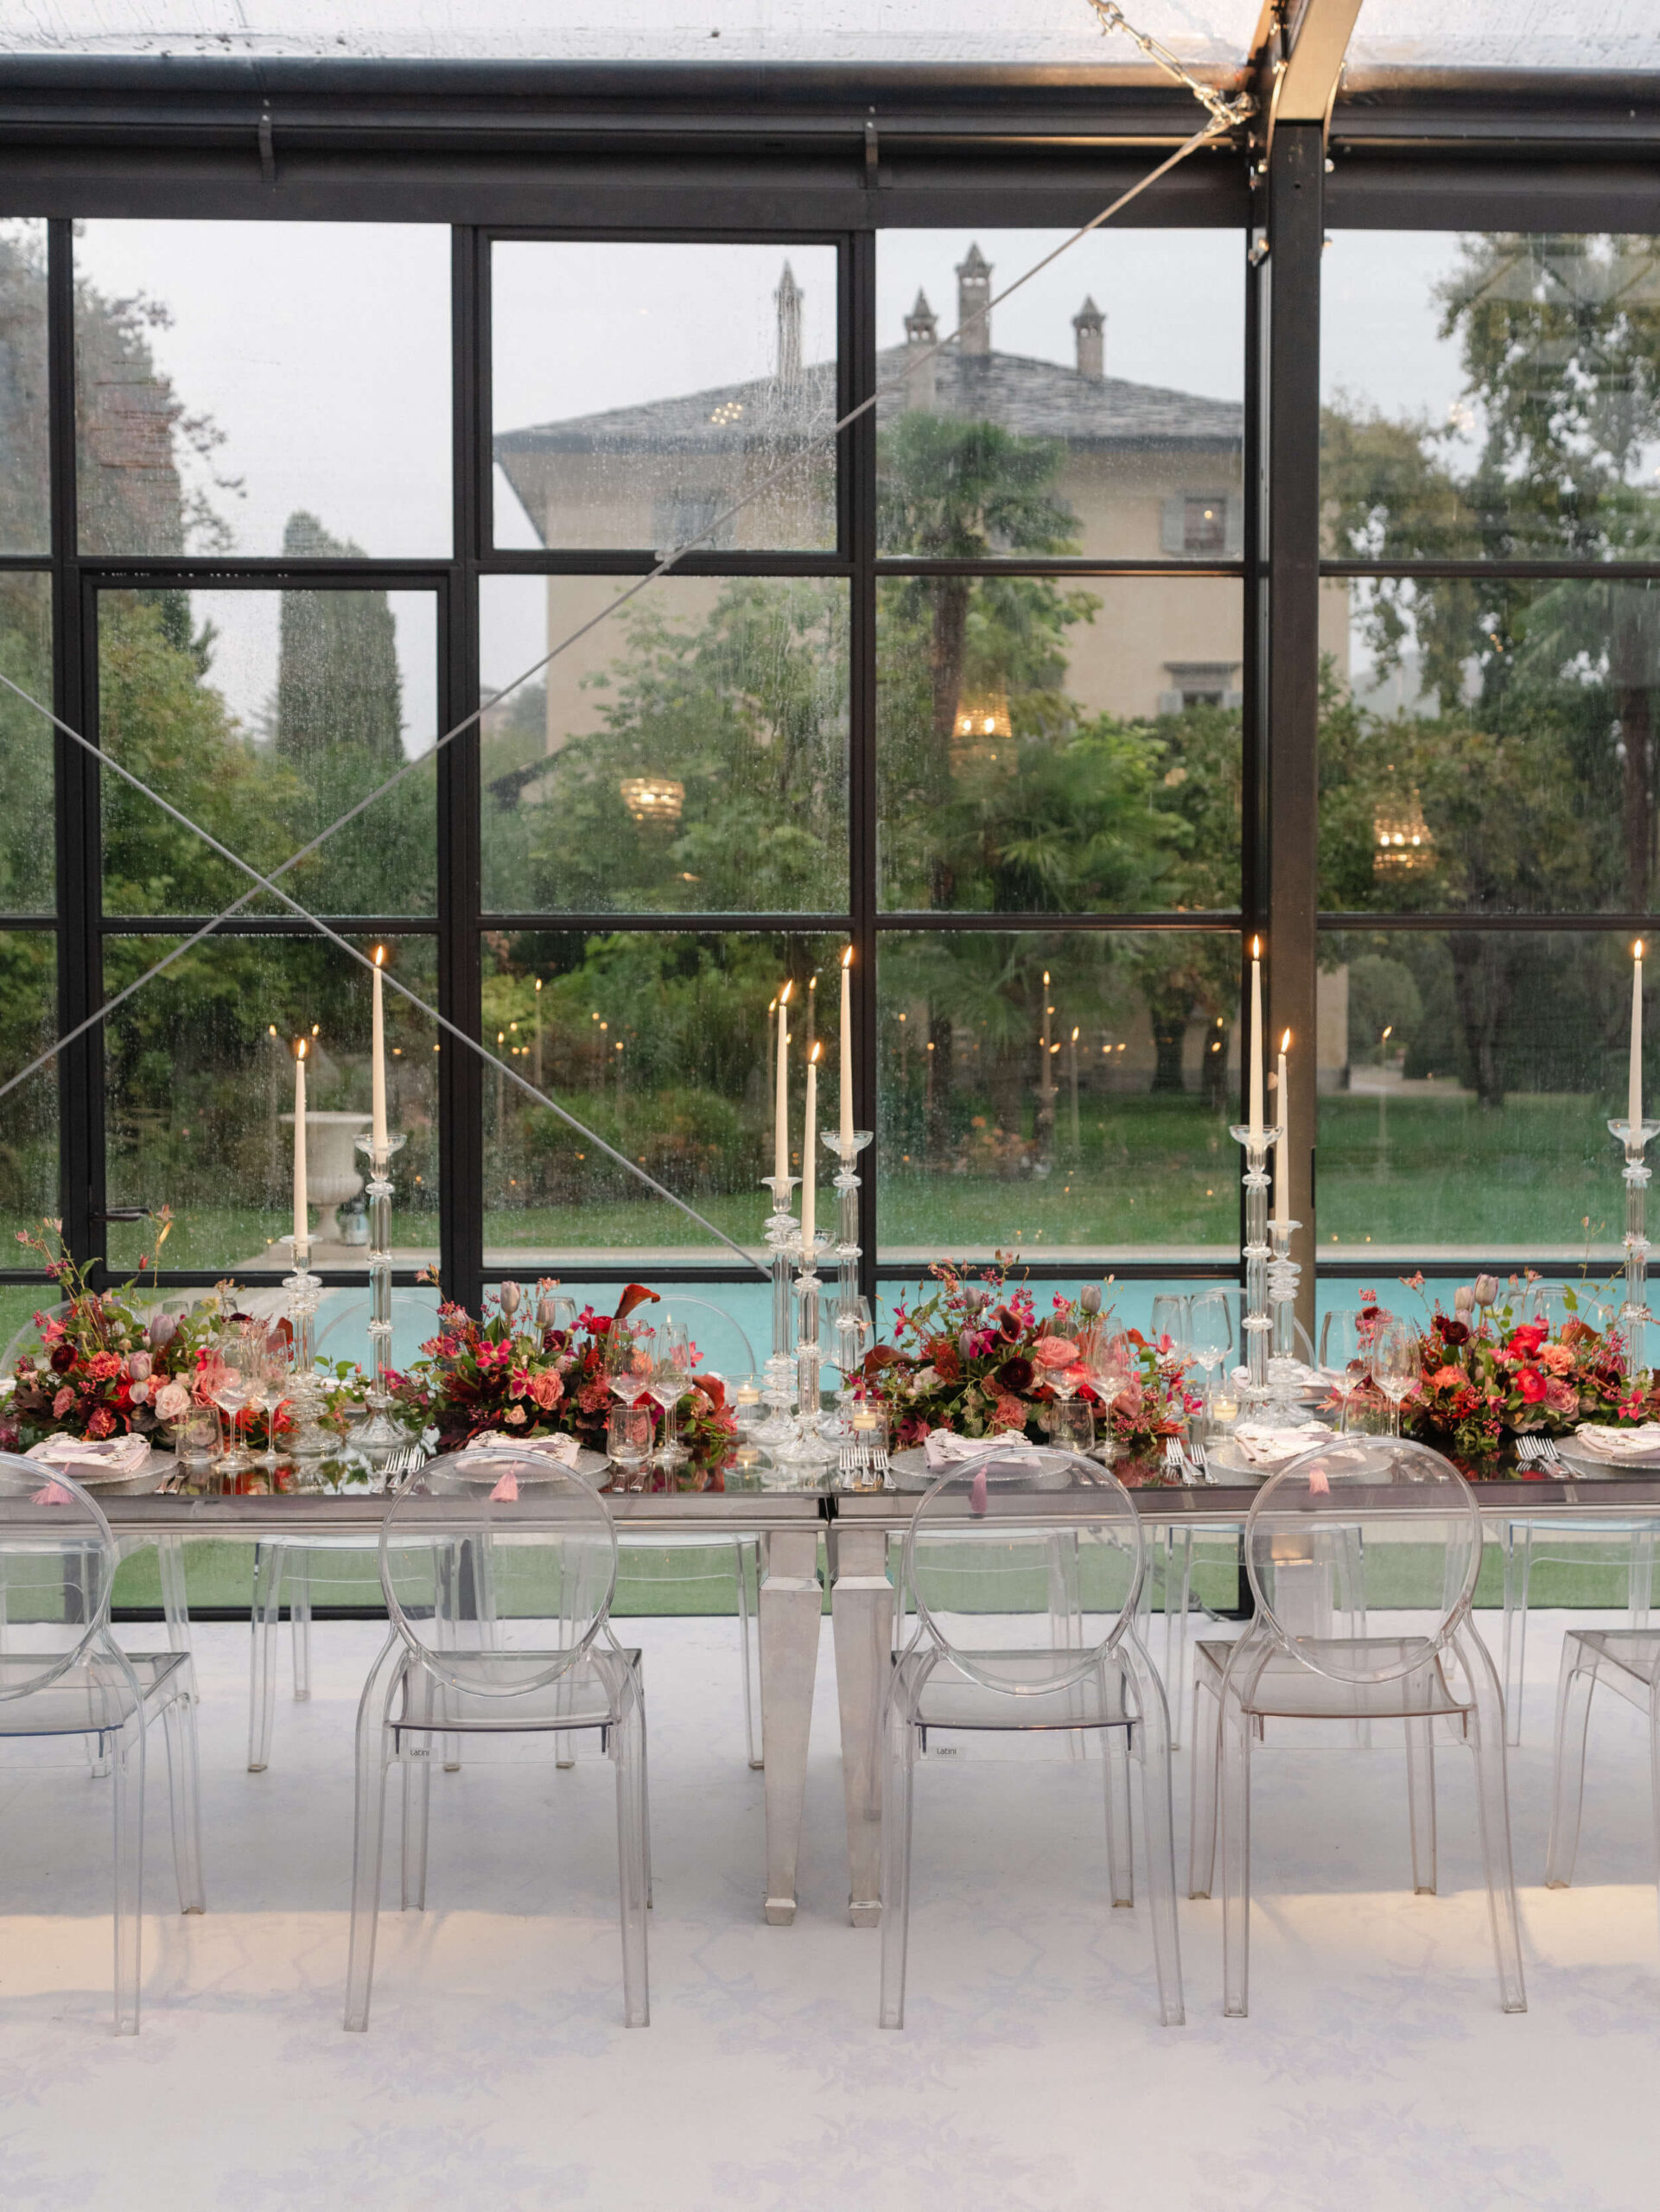 Villa Balbiano wedding reception design by Sarah Haywood